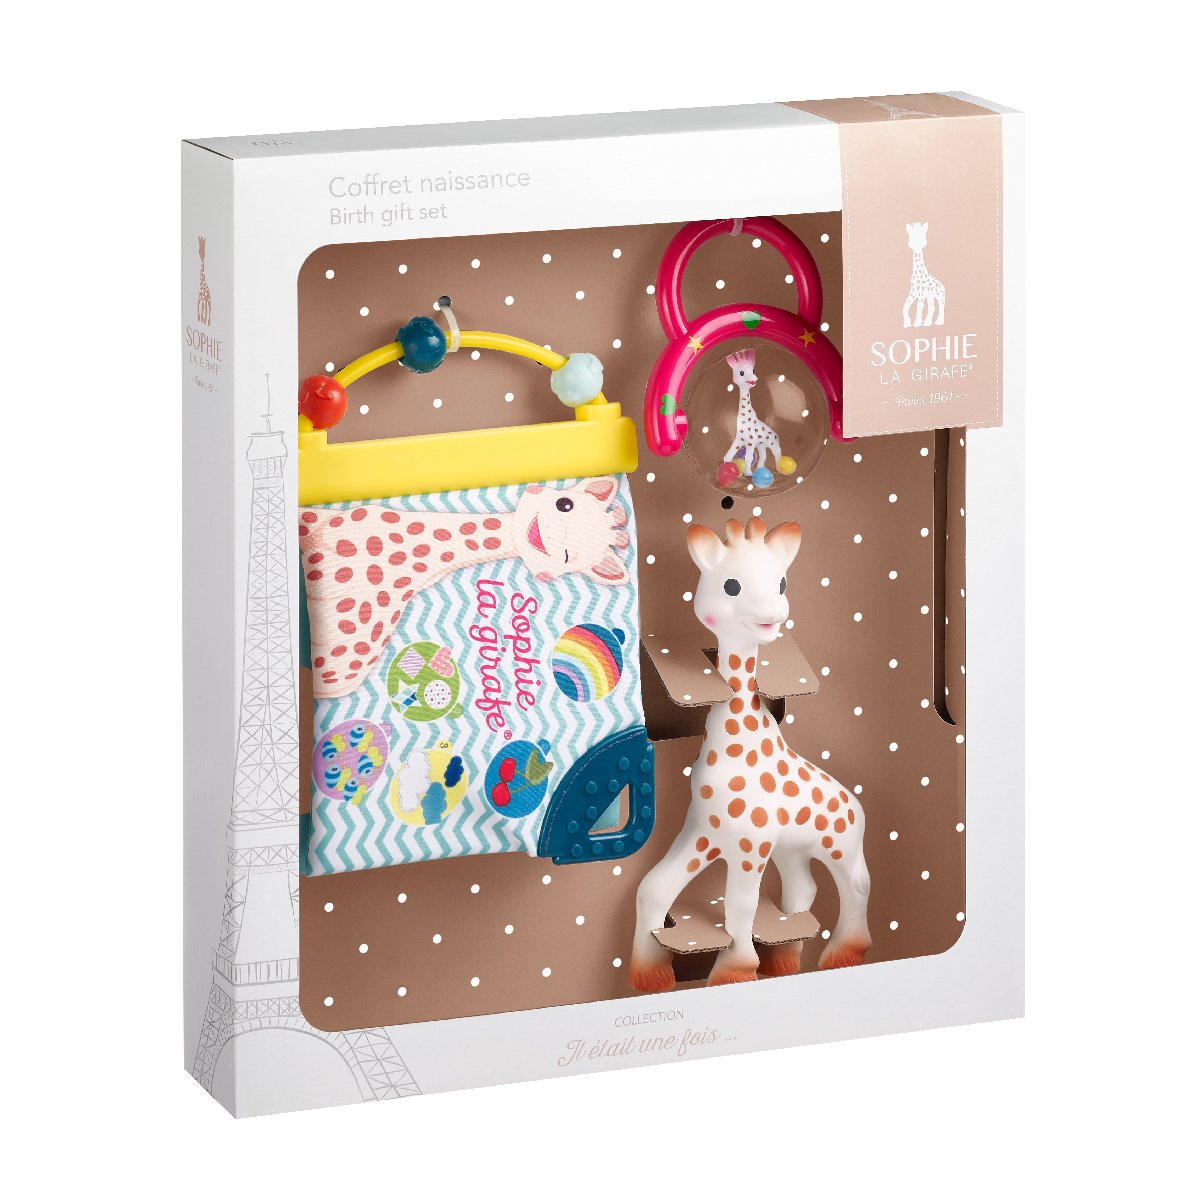 Birth gift set Sophie la girafe